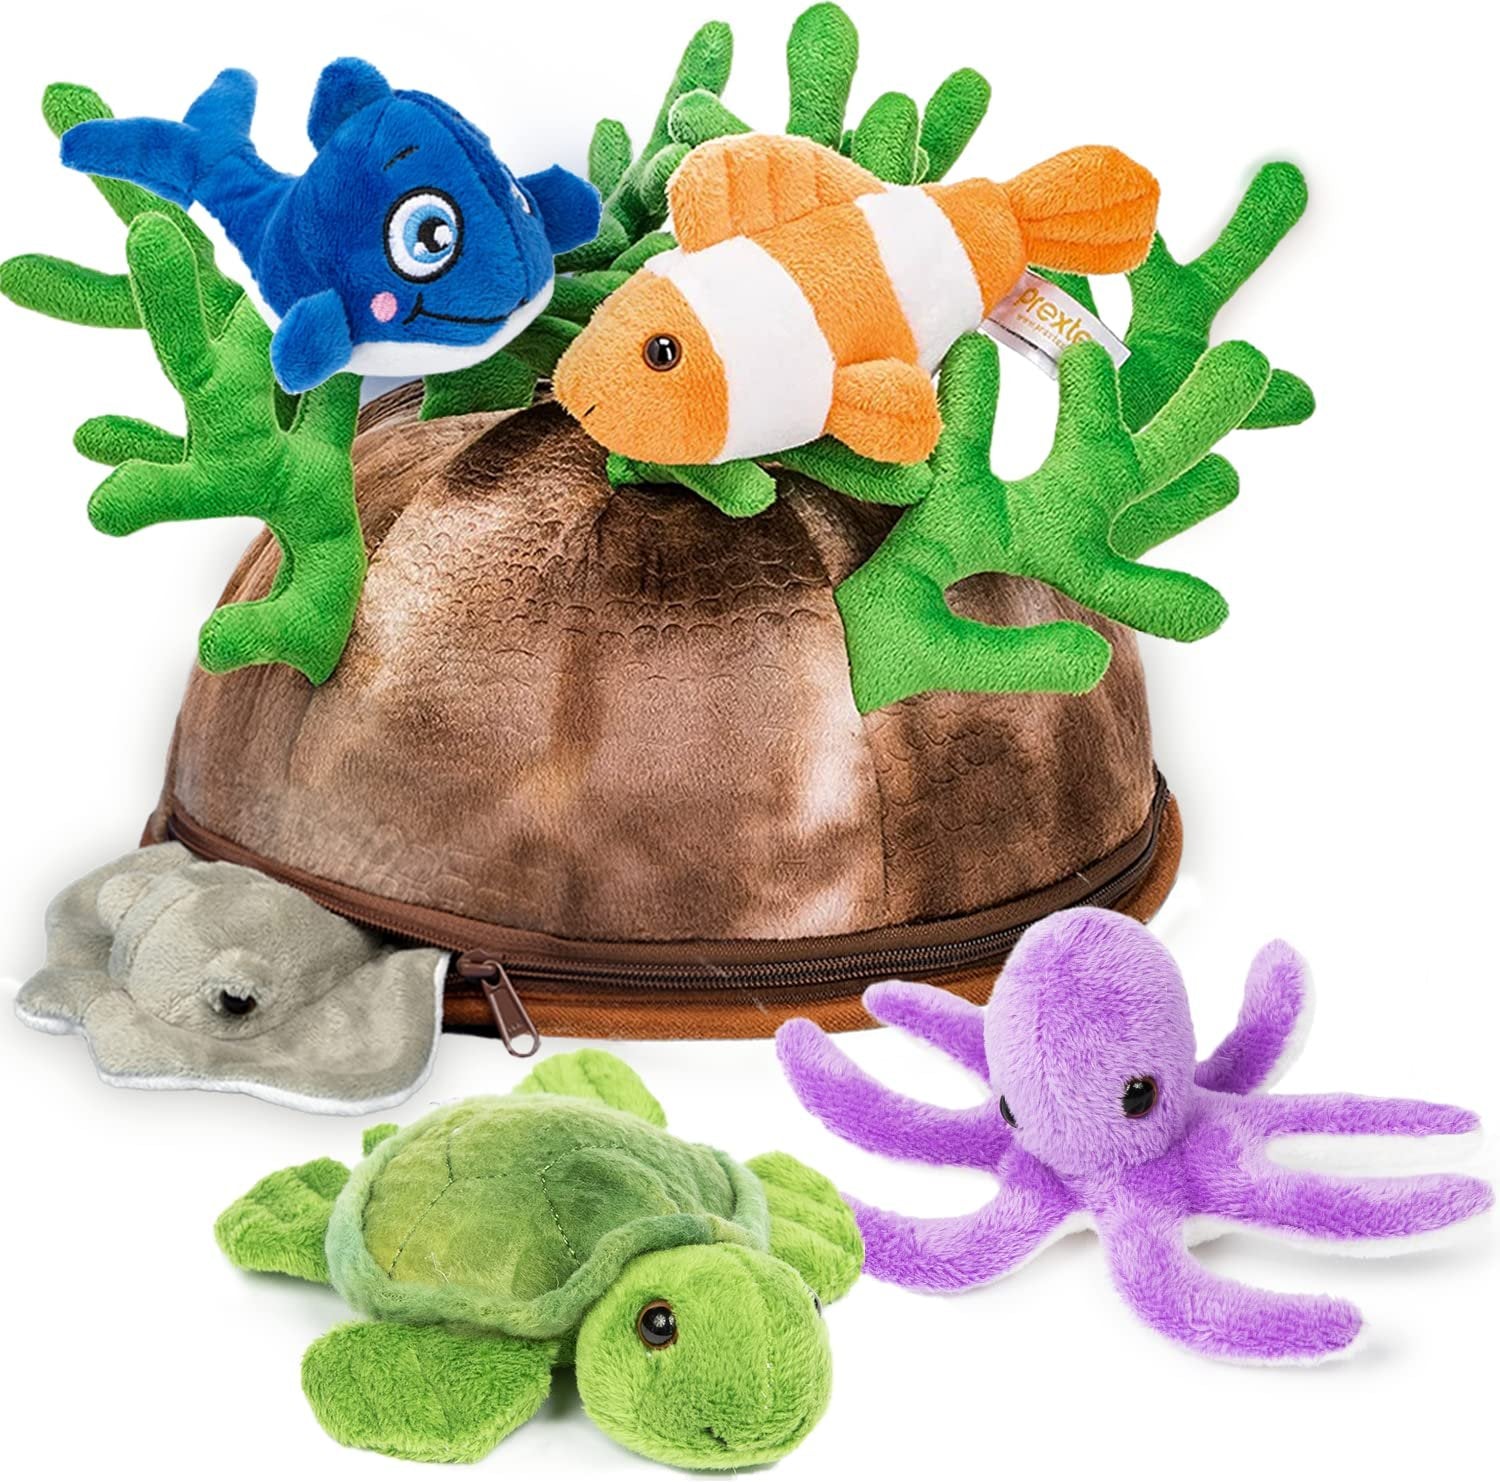 Prextex 5-pc Stuffed Sea Animal & Toy Storage | Soft Plush Sea Creatures Toys for Kids | Small/Mini Stuffed Animals in Bulk | Cute Toy Ocean Decor, Ocean Animals | Birthday Gift Bag, Party Favor/Decor